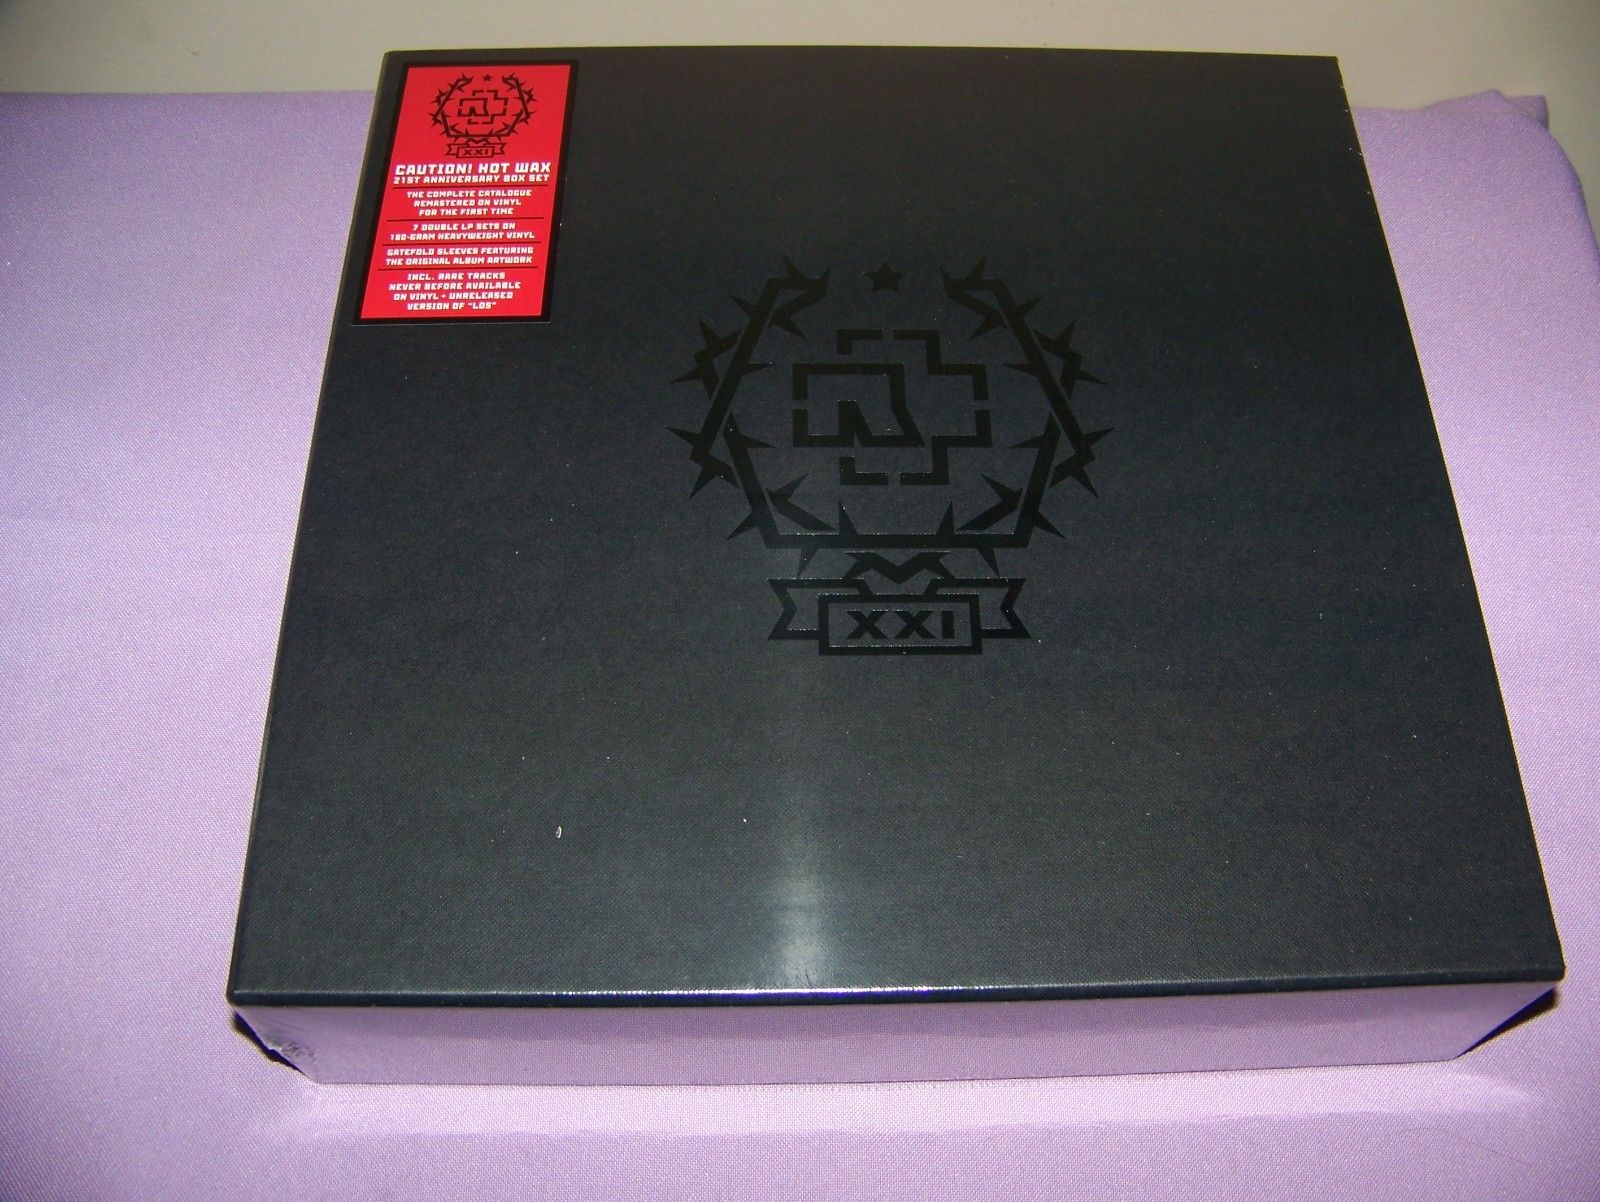 popsike.com - RAMMSTEIN XXI VINYL BOX SET OF 7 DOUBLE 180 GRAM VINYL LPS  NUMBERED & LTD SEALED - auction details